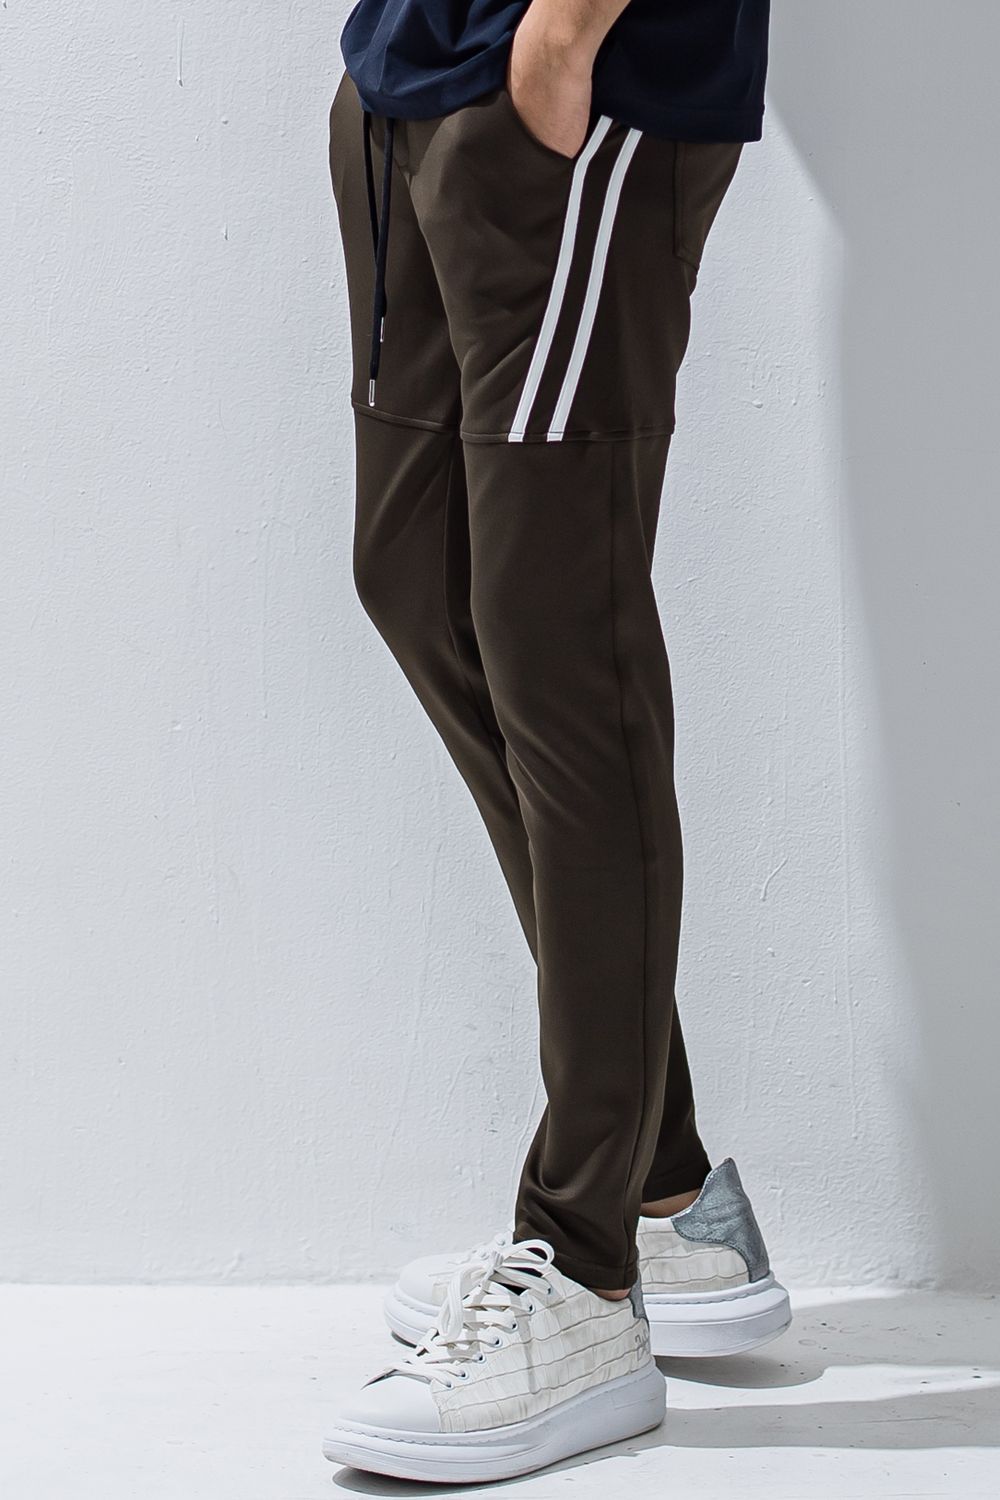 RESOUND CLOTHING - TYLER LINE PANTS / タイラー ライン パンツ 